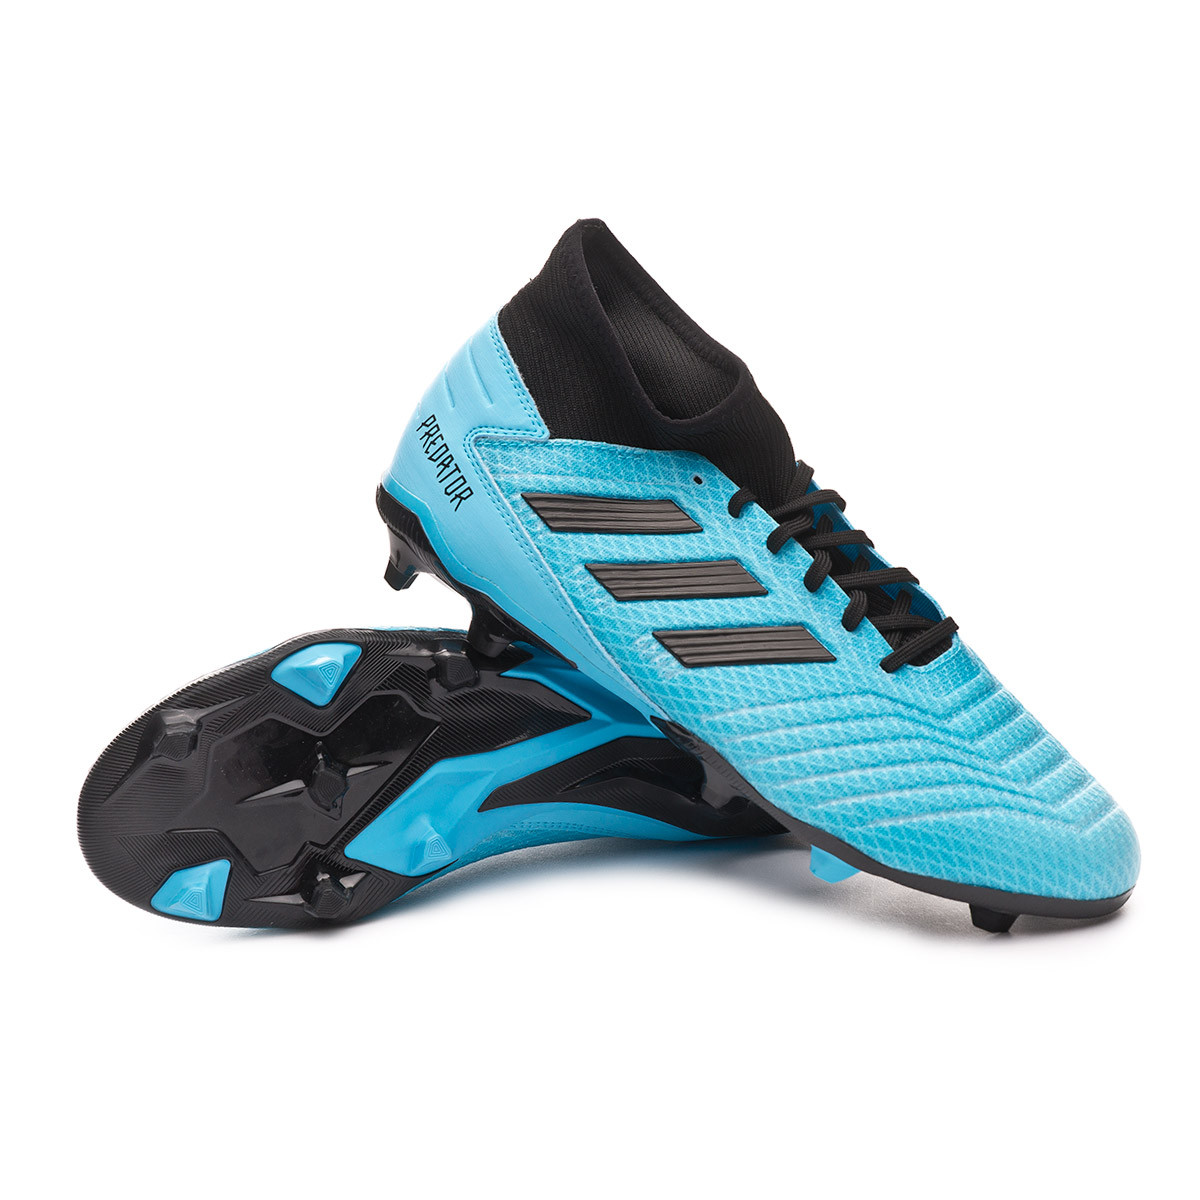 Football Boots Adidas Predator 19 3 Fg Bright Cyan Core Black